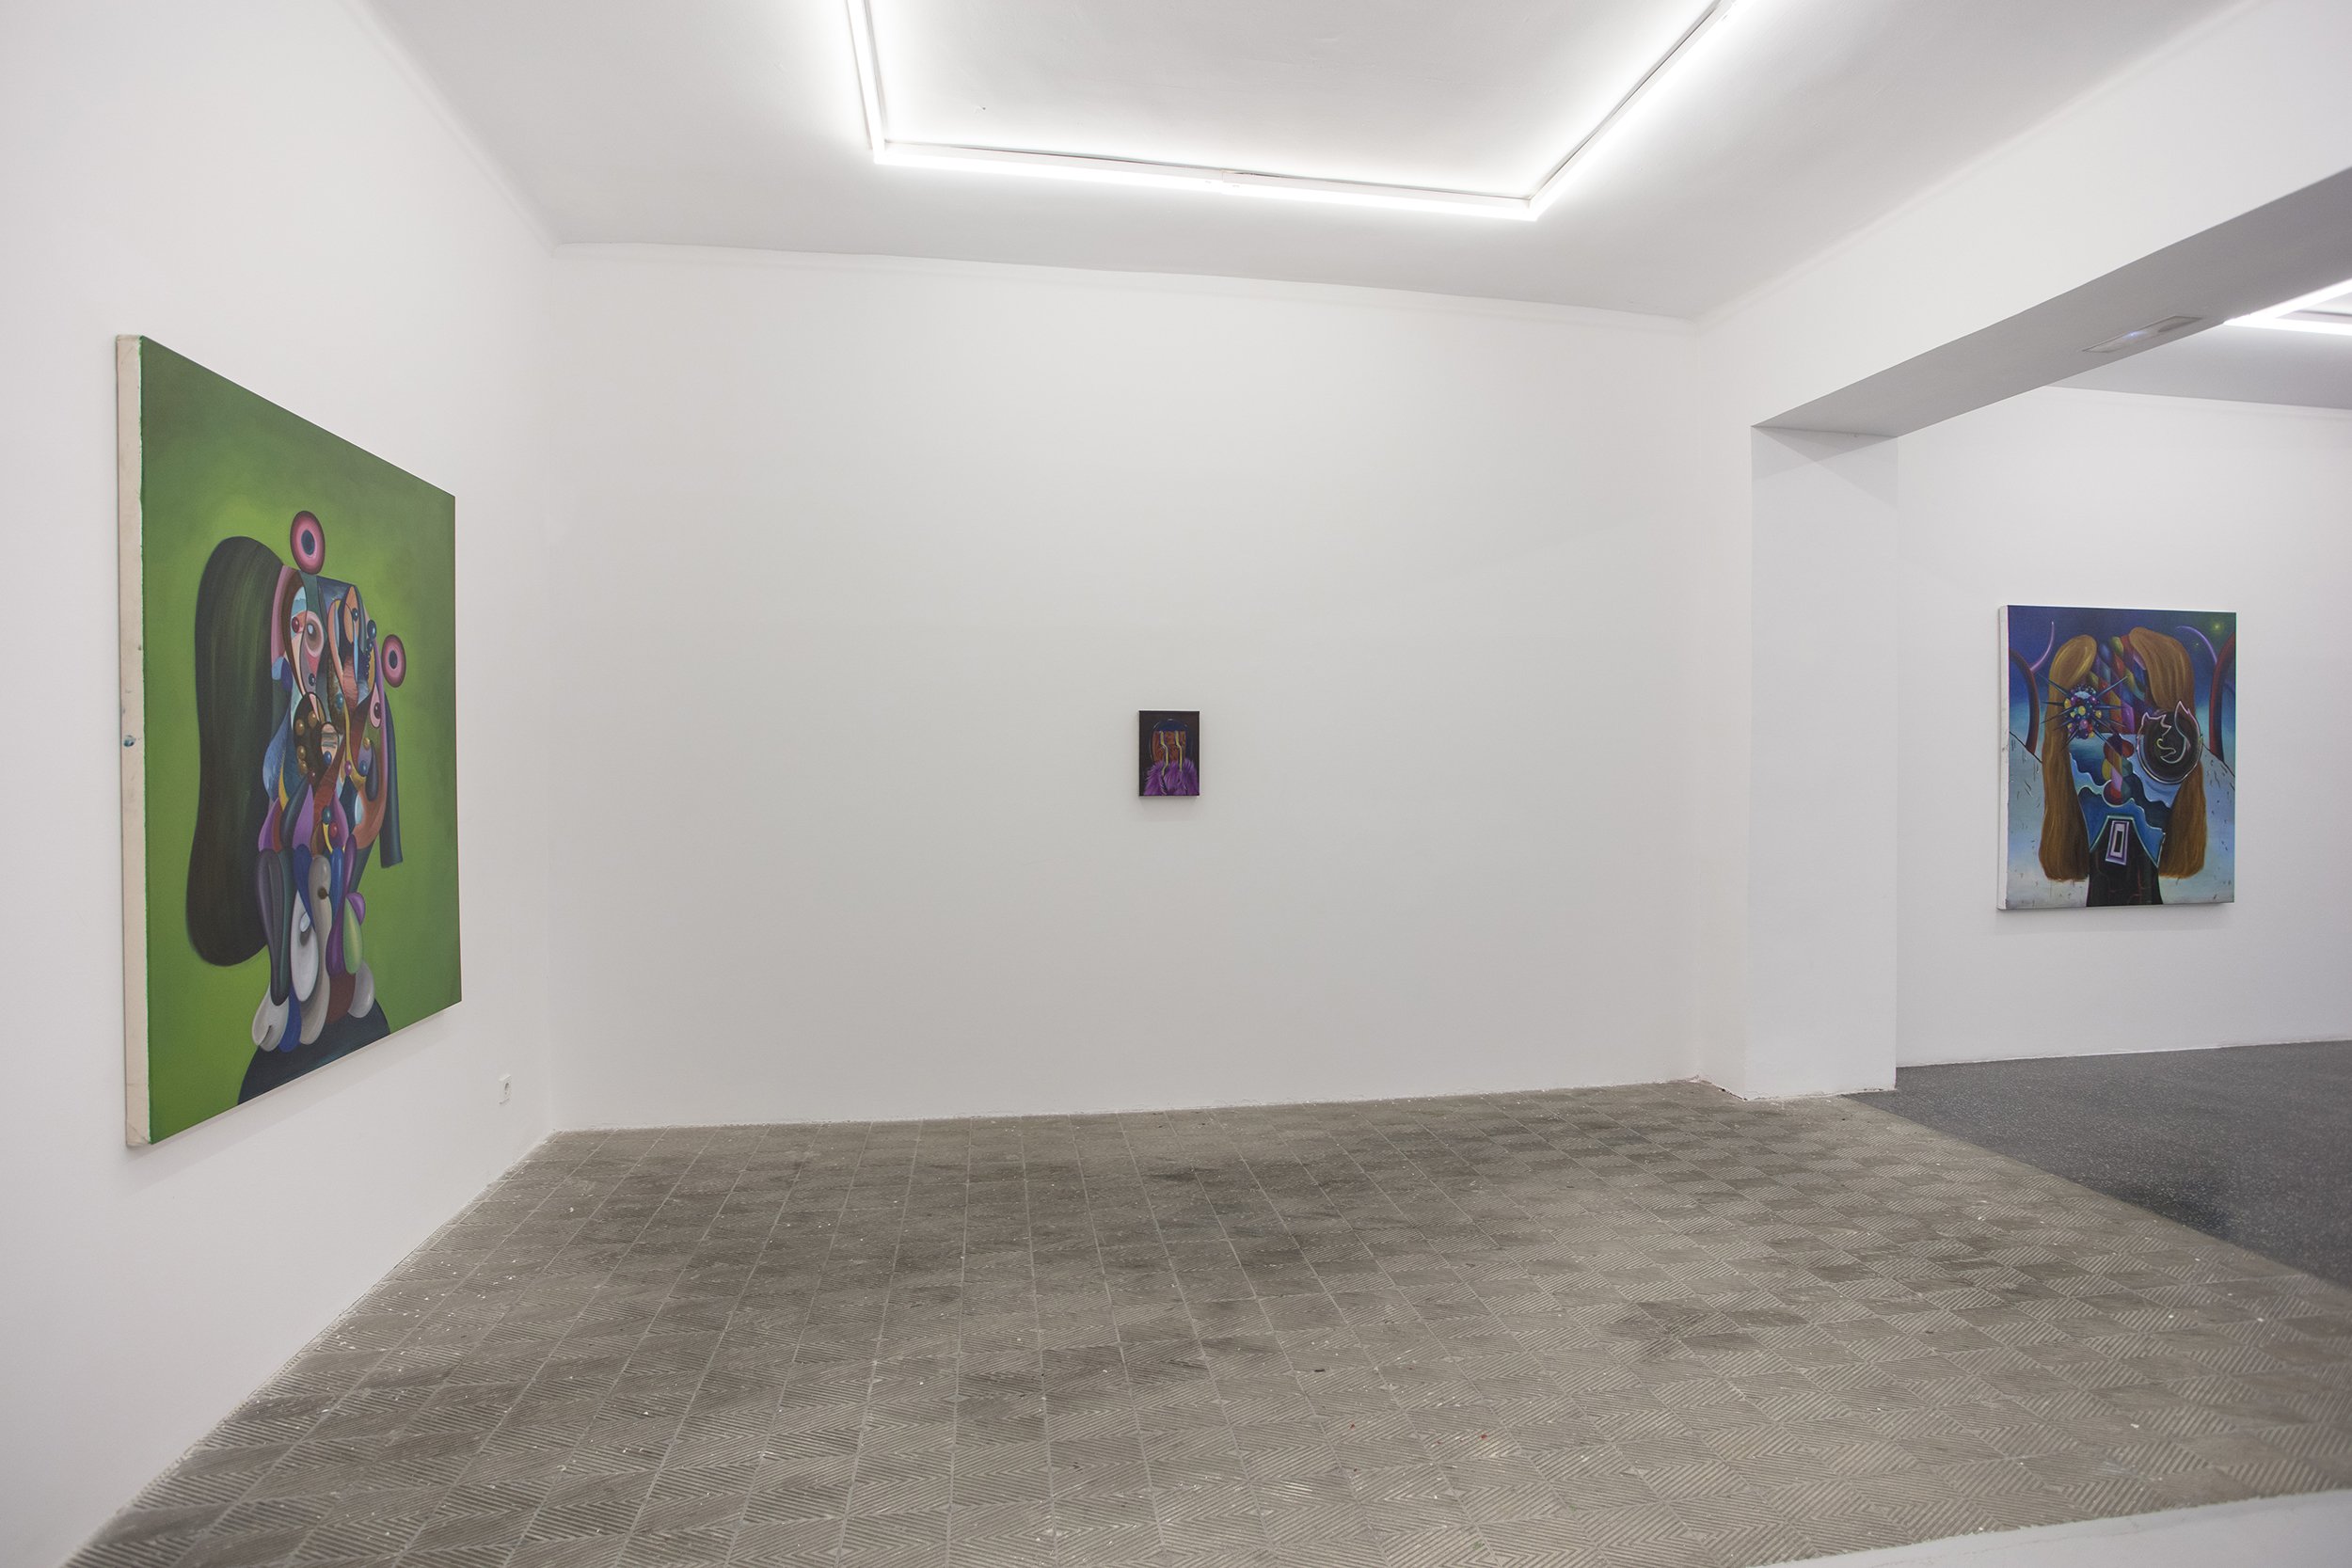  Installation View    “Hall of Mirrors"    2021-2022 Galeria Marta Cervera. Madrid 